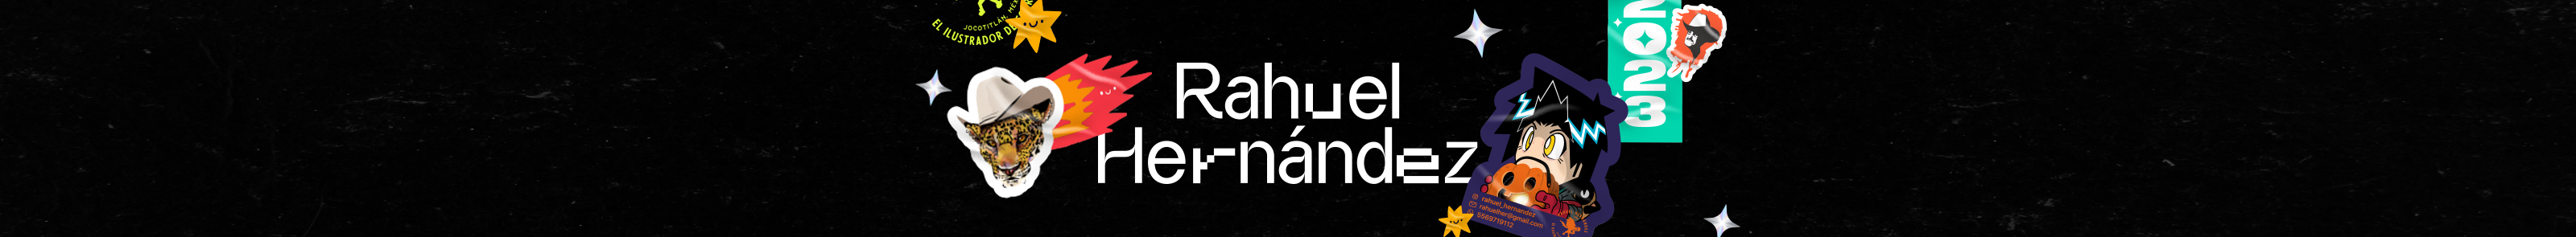 Rahuel Hernández's profile banner